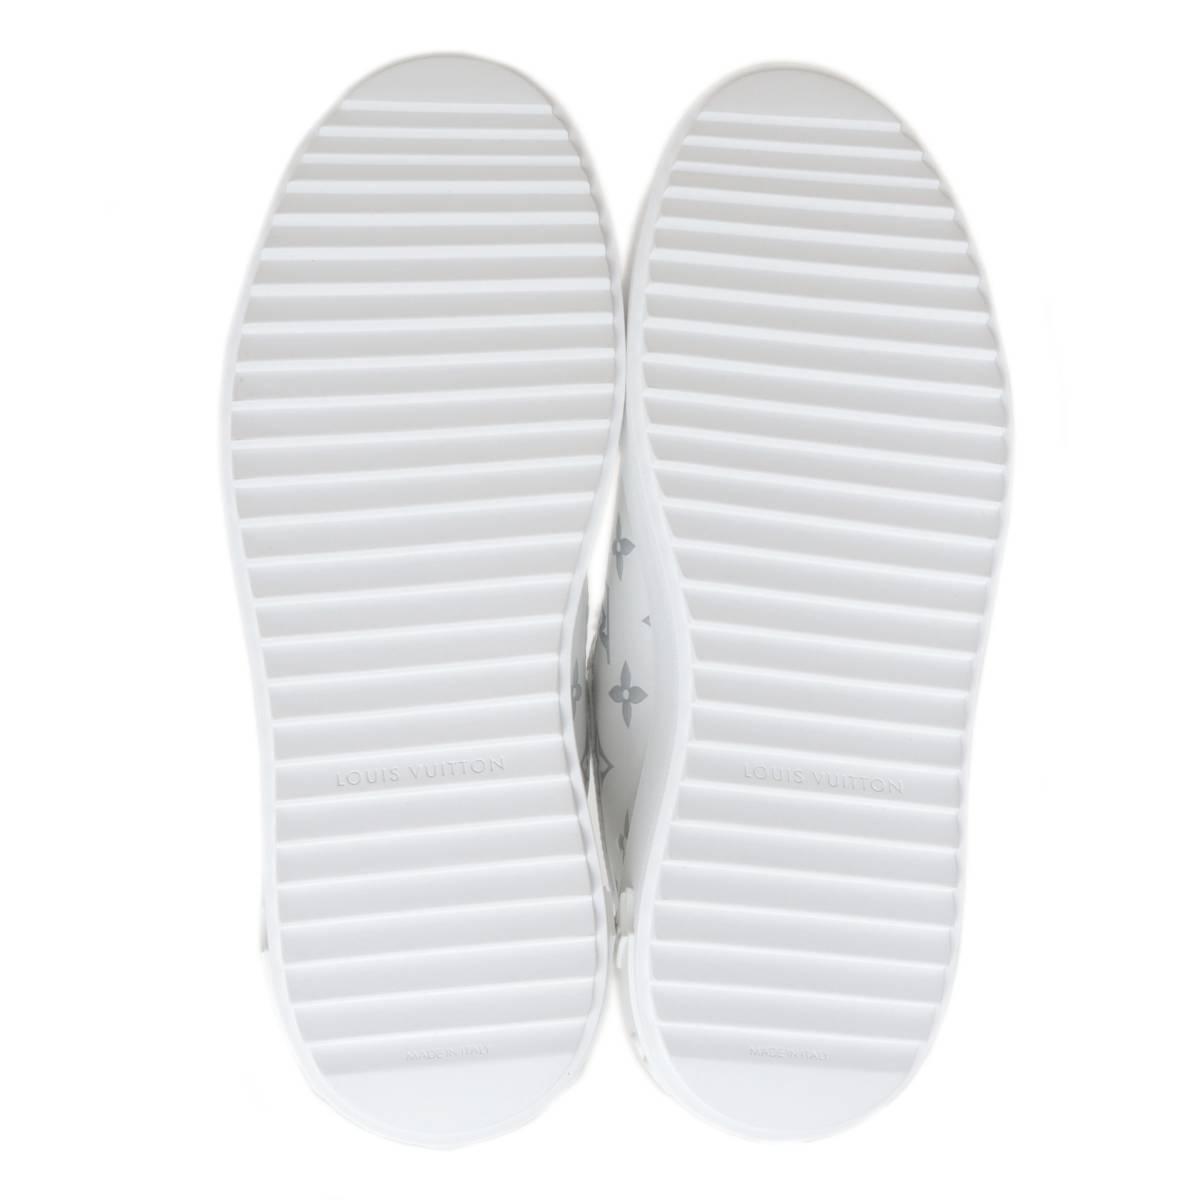 Louis Vuitton Women's Time Out Sneakers Monogram Print Leather White 2361701